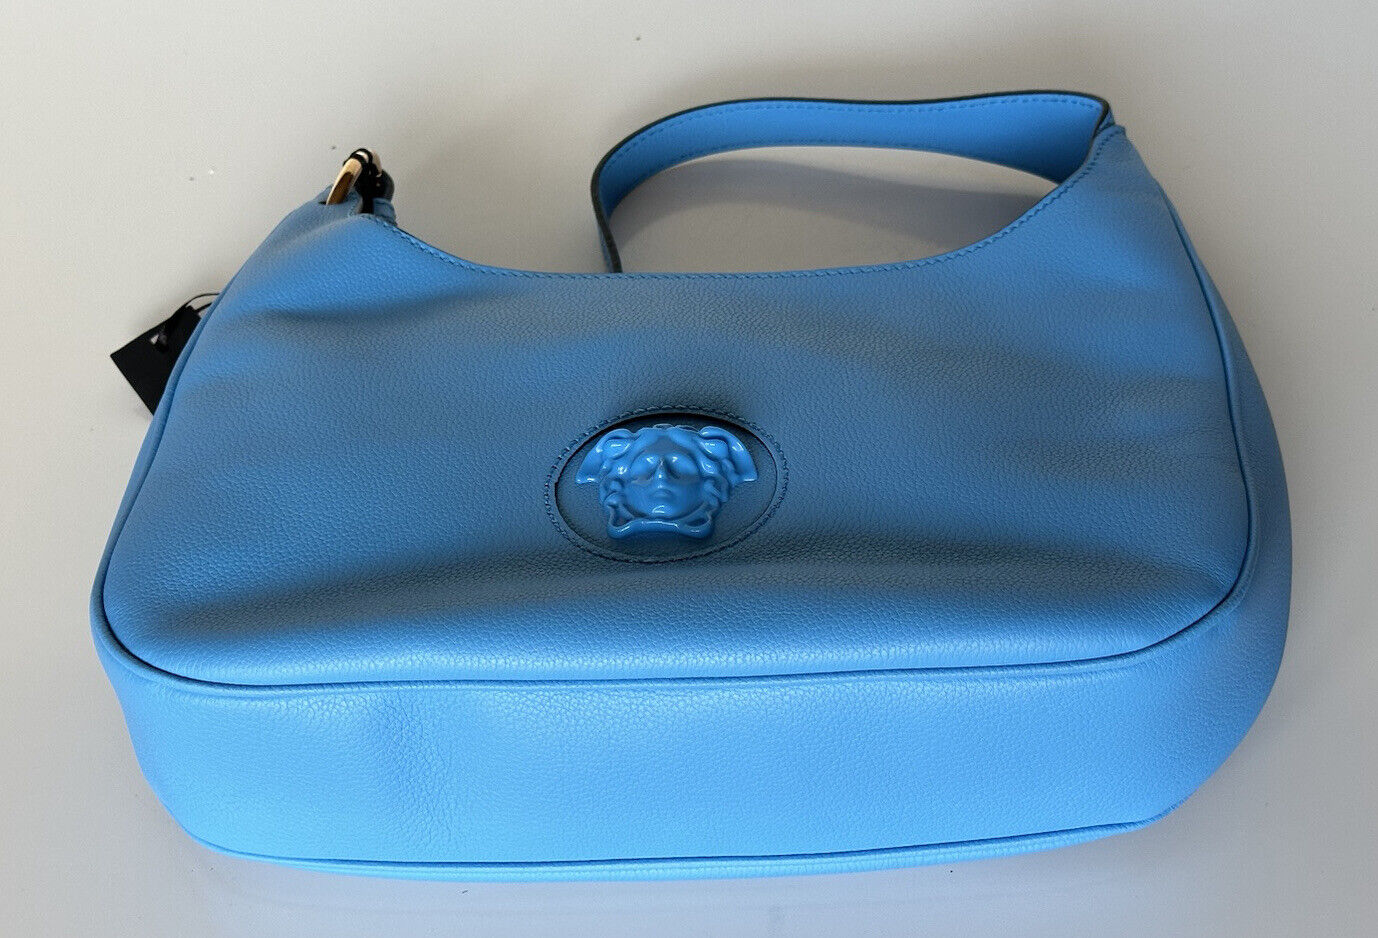 NWT $1875 Versace Medusa Head Calf Leather Blue Medium Hobo Bag 1000699 IT